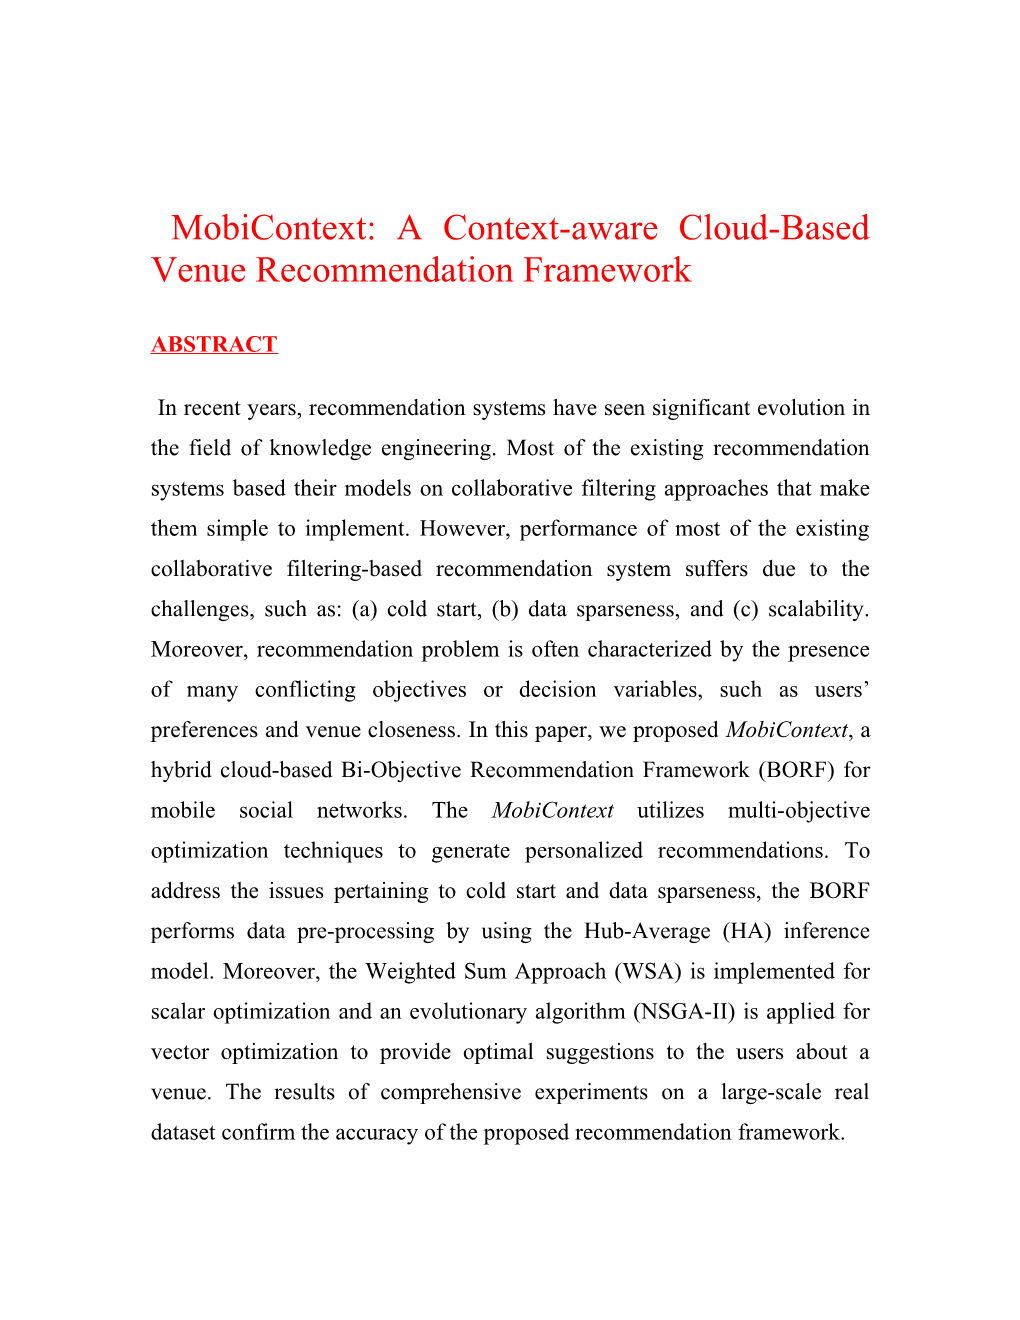 Mobicontext: a Context-Aware Cloud-Based Venue Recommendation Framework